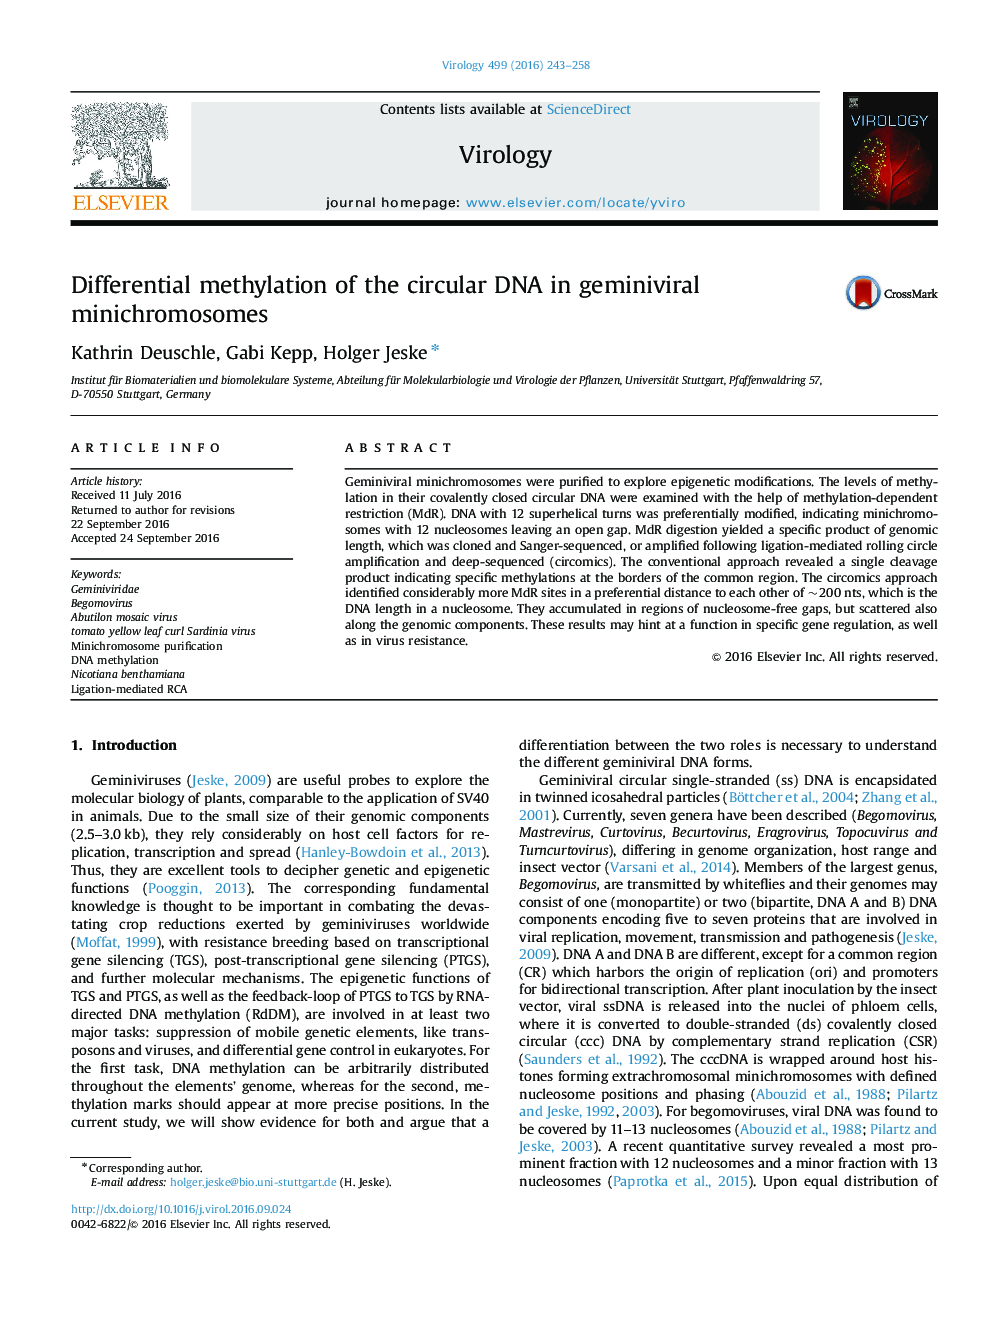 Differential methylation of the circular DNA in geminiviral minichromosomes